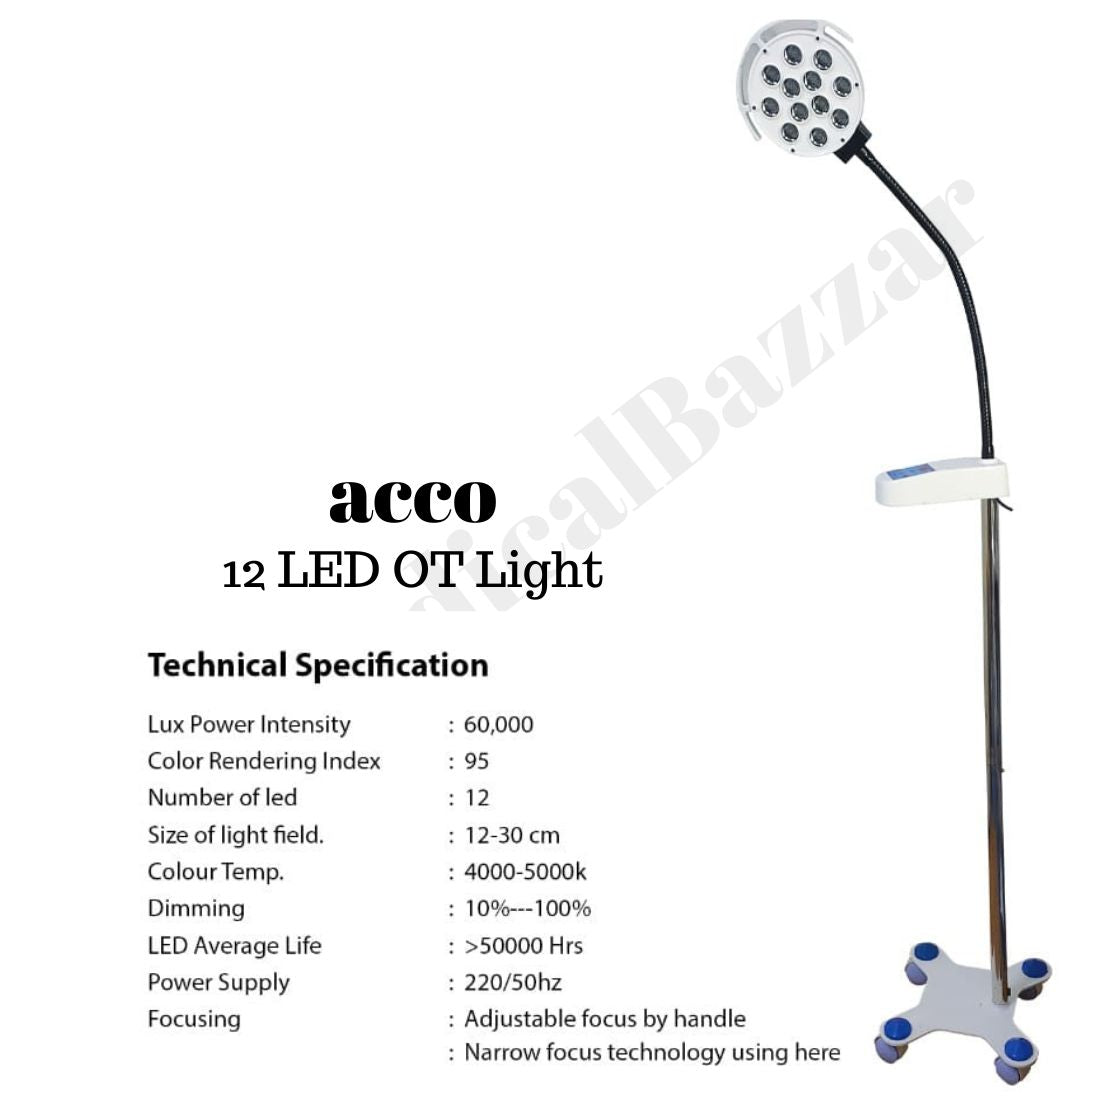 acco Examination OT Light with 12 Led